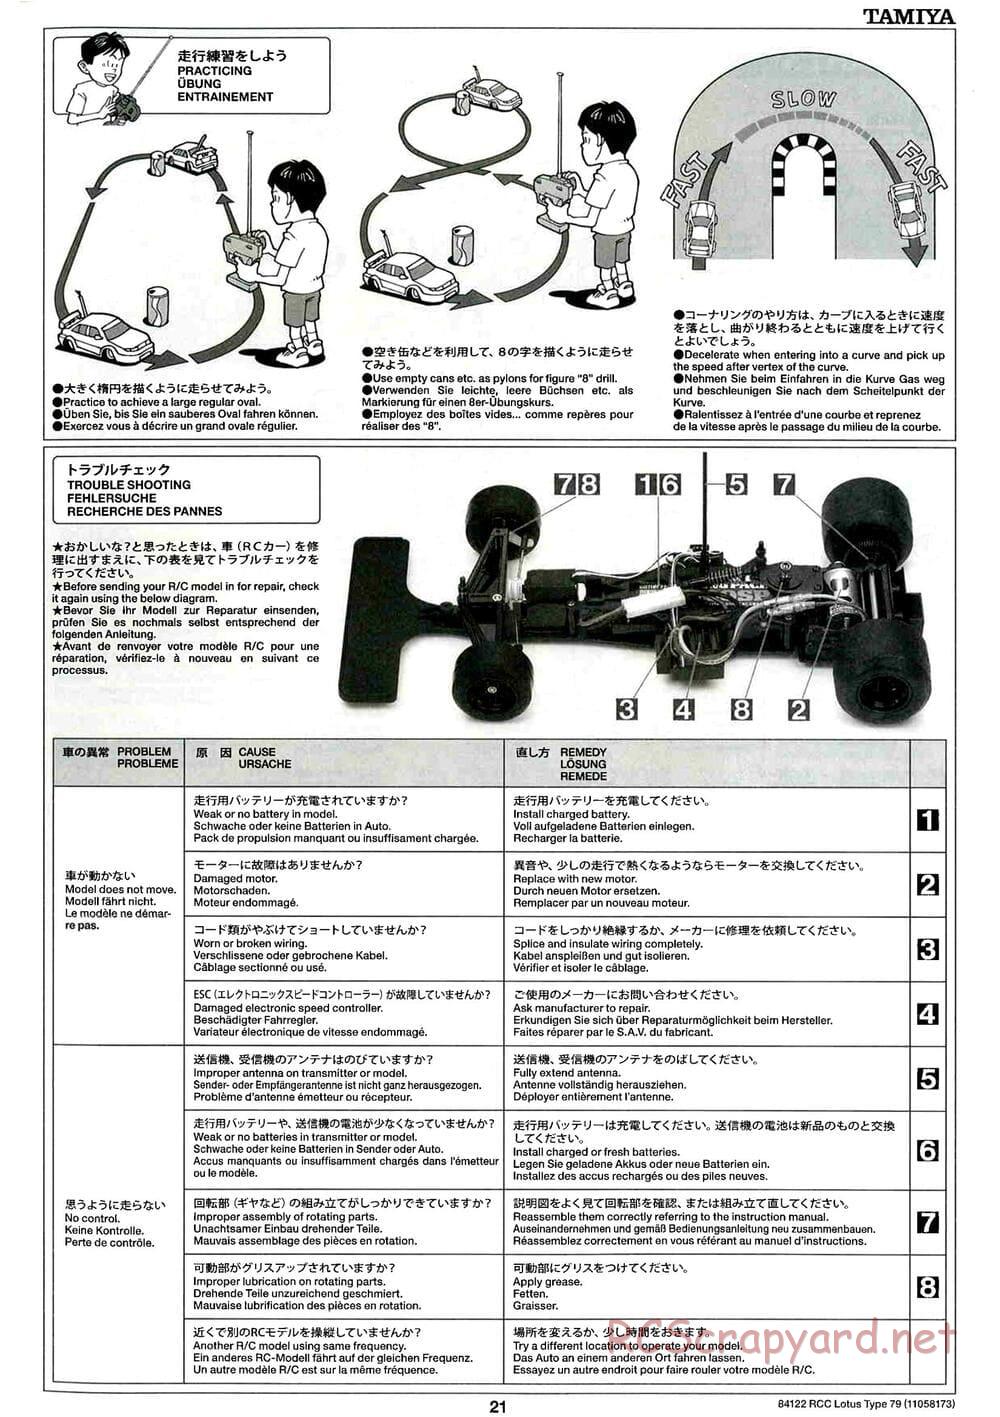 Tamiya - Lotus Type 79 - F104W Chassis - Manual - Page 21